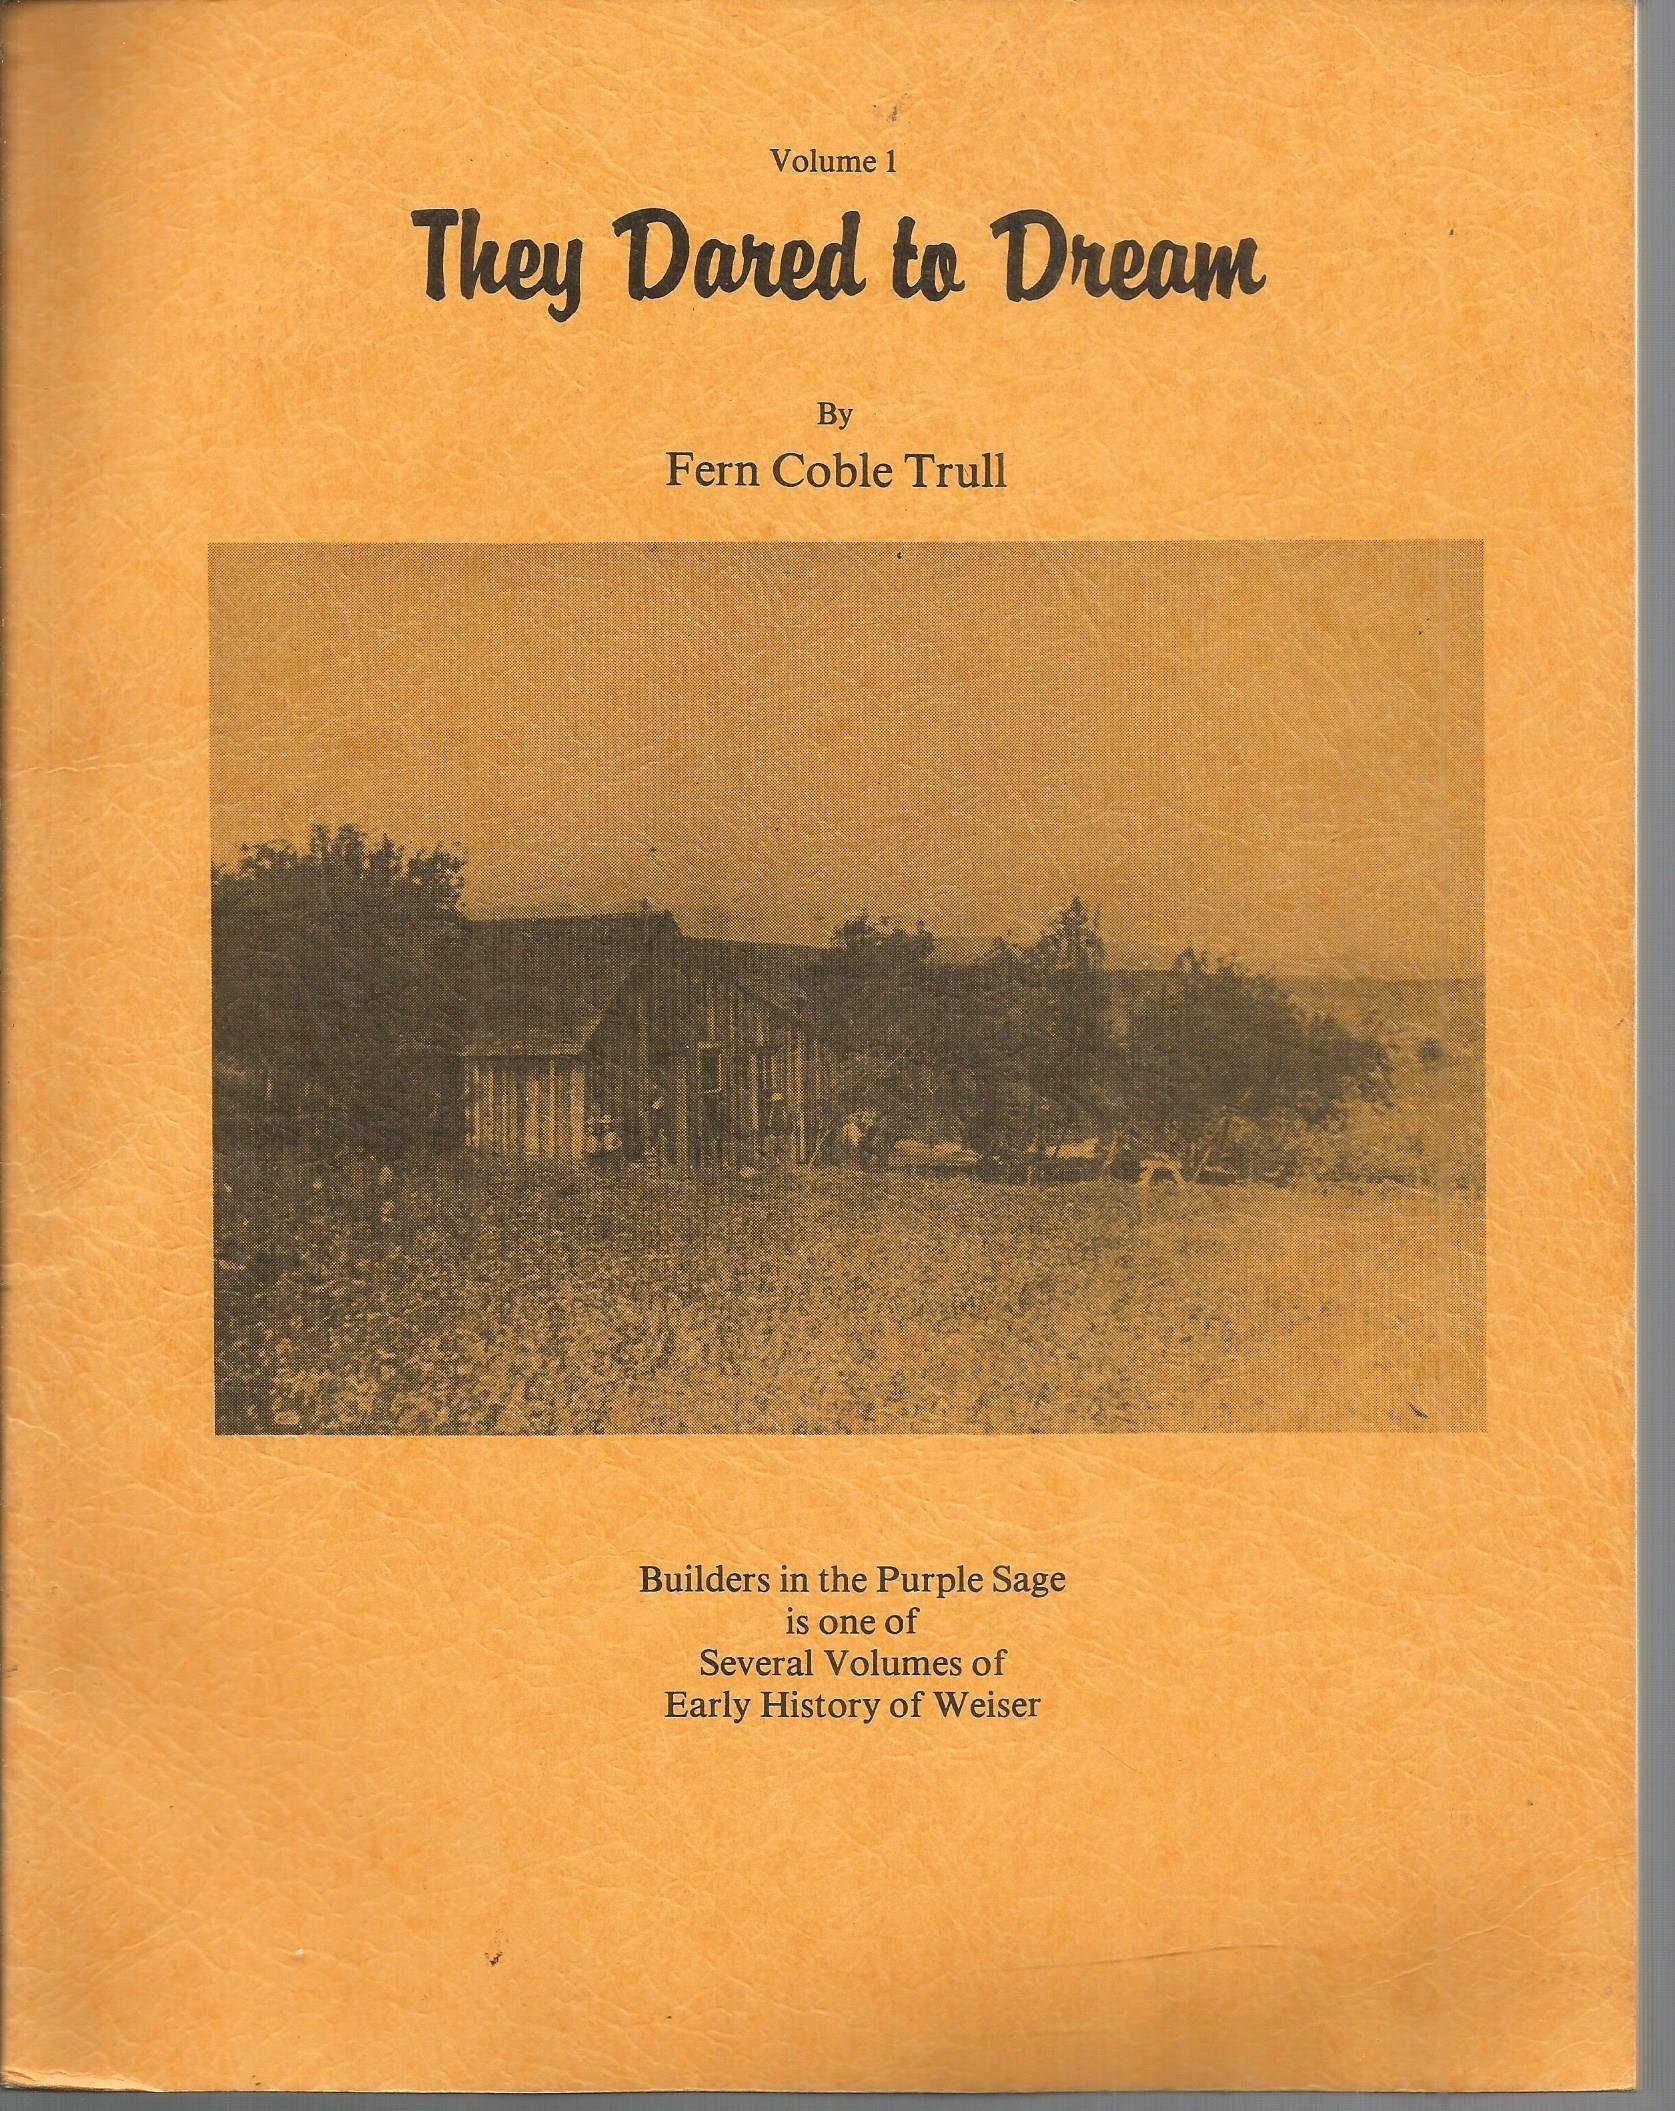 They dared to dream (book cover)